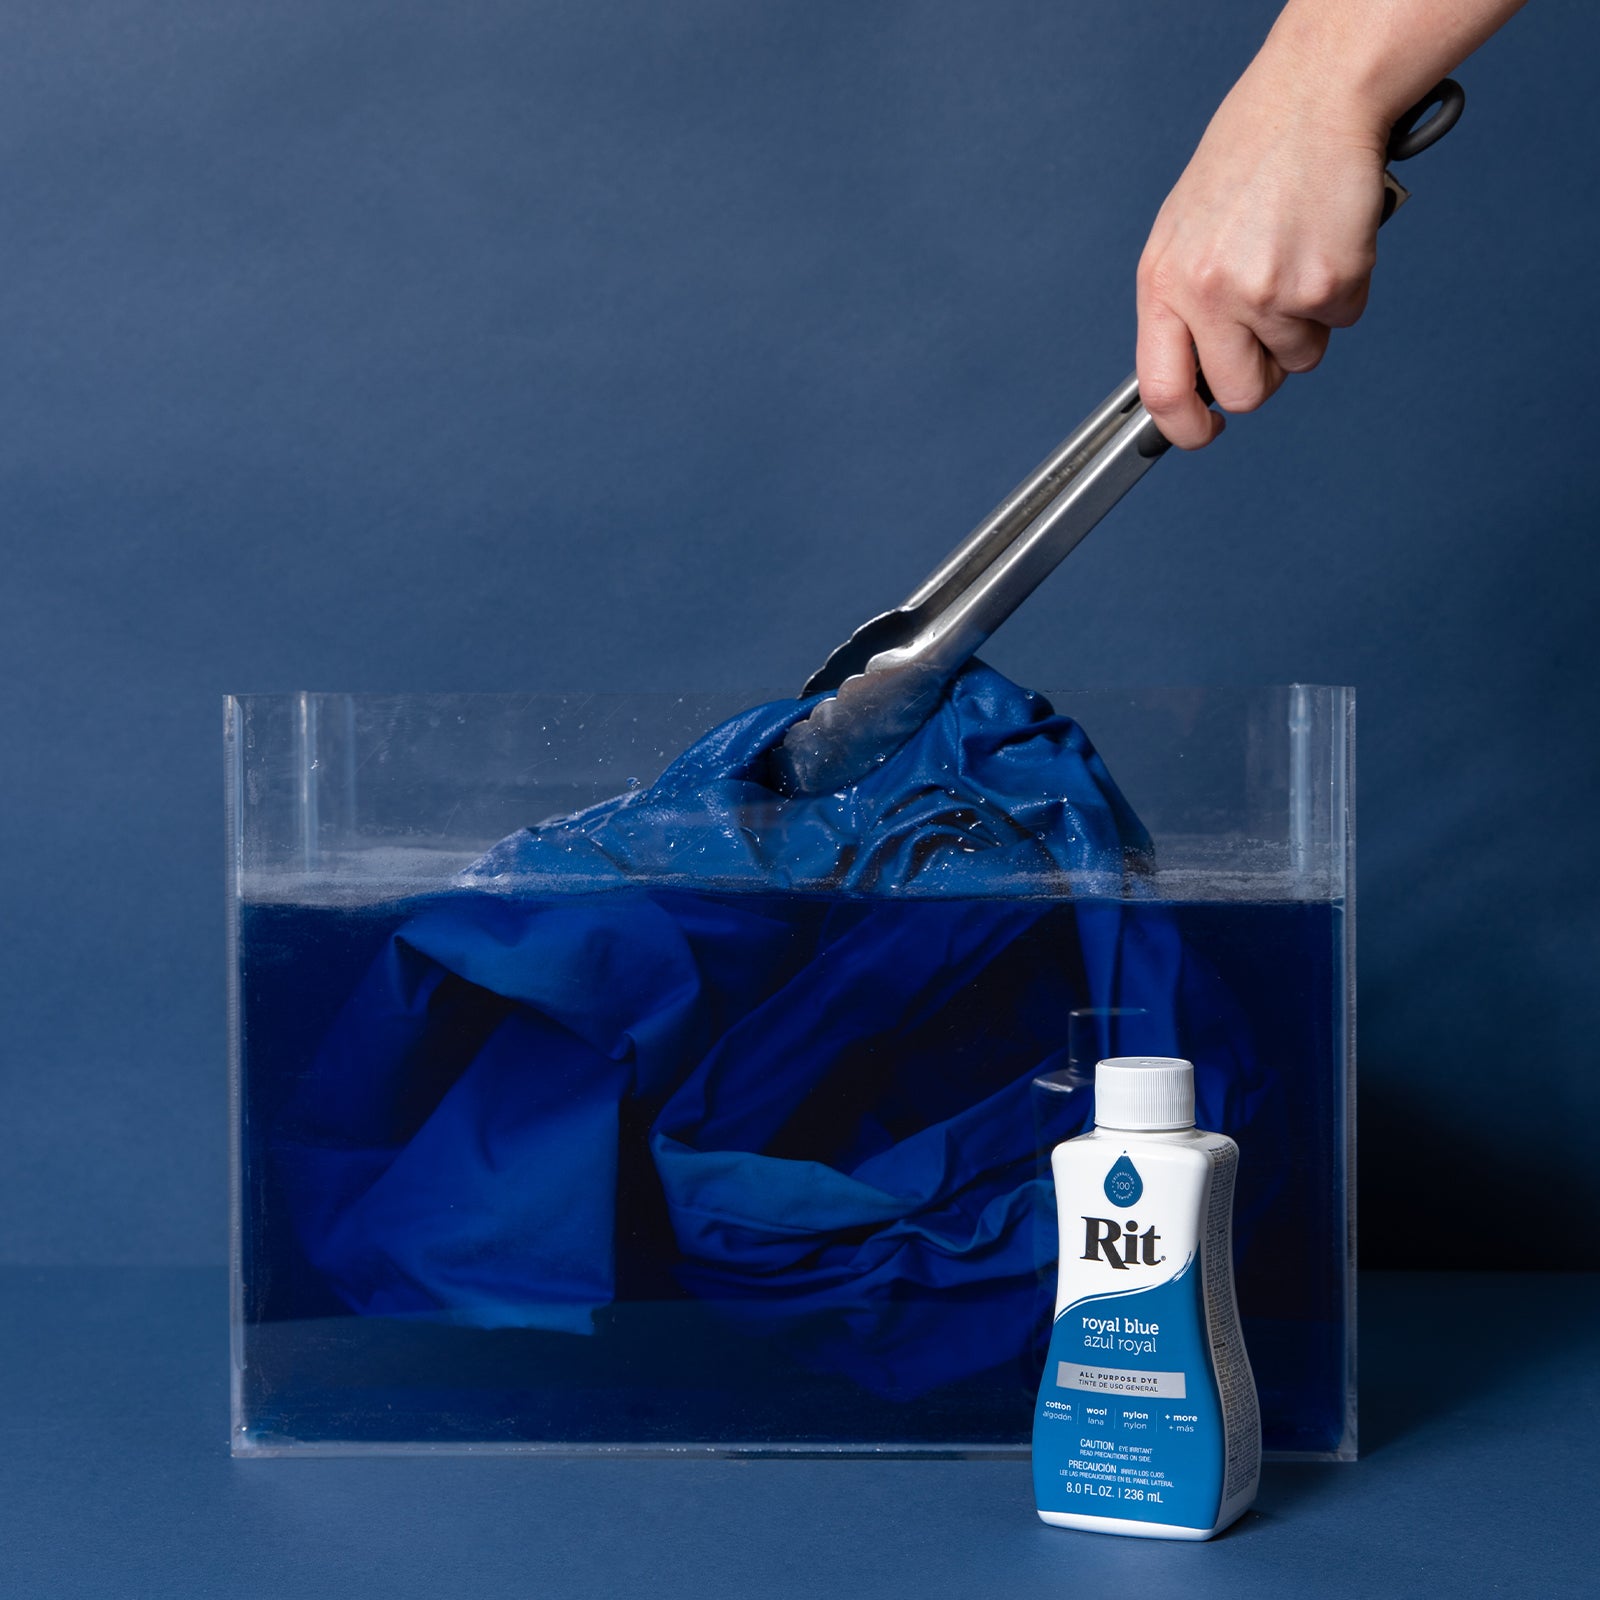 Rit Navy Blue, All Purpose Liquid Dye